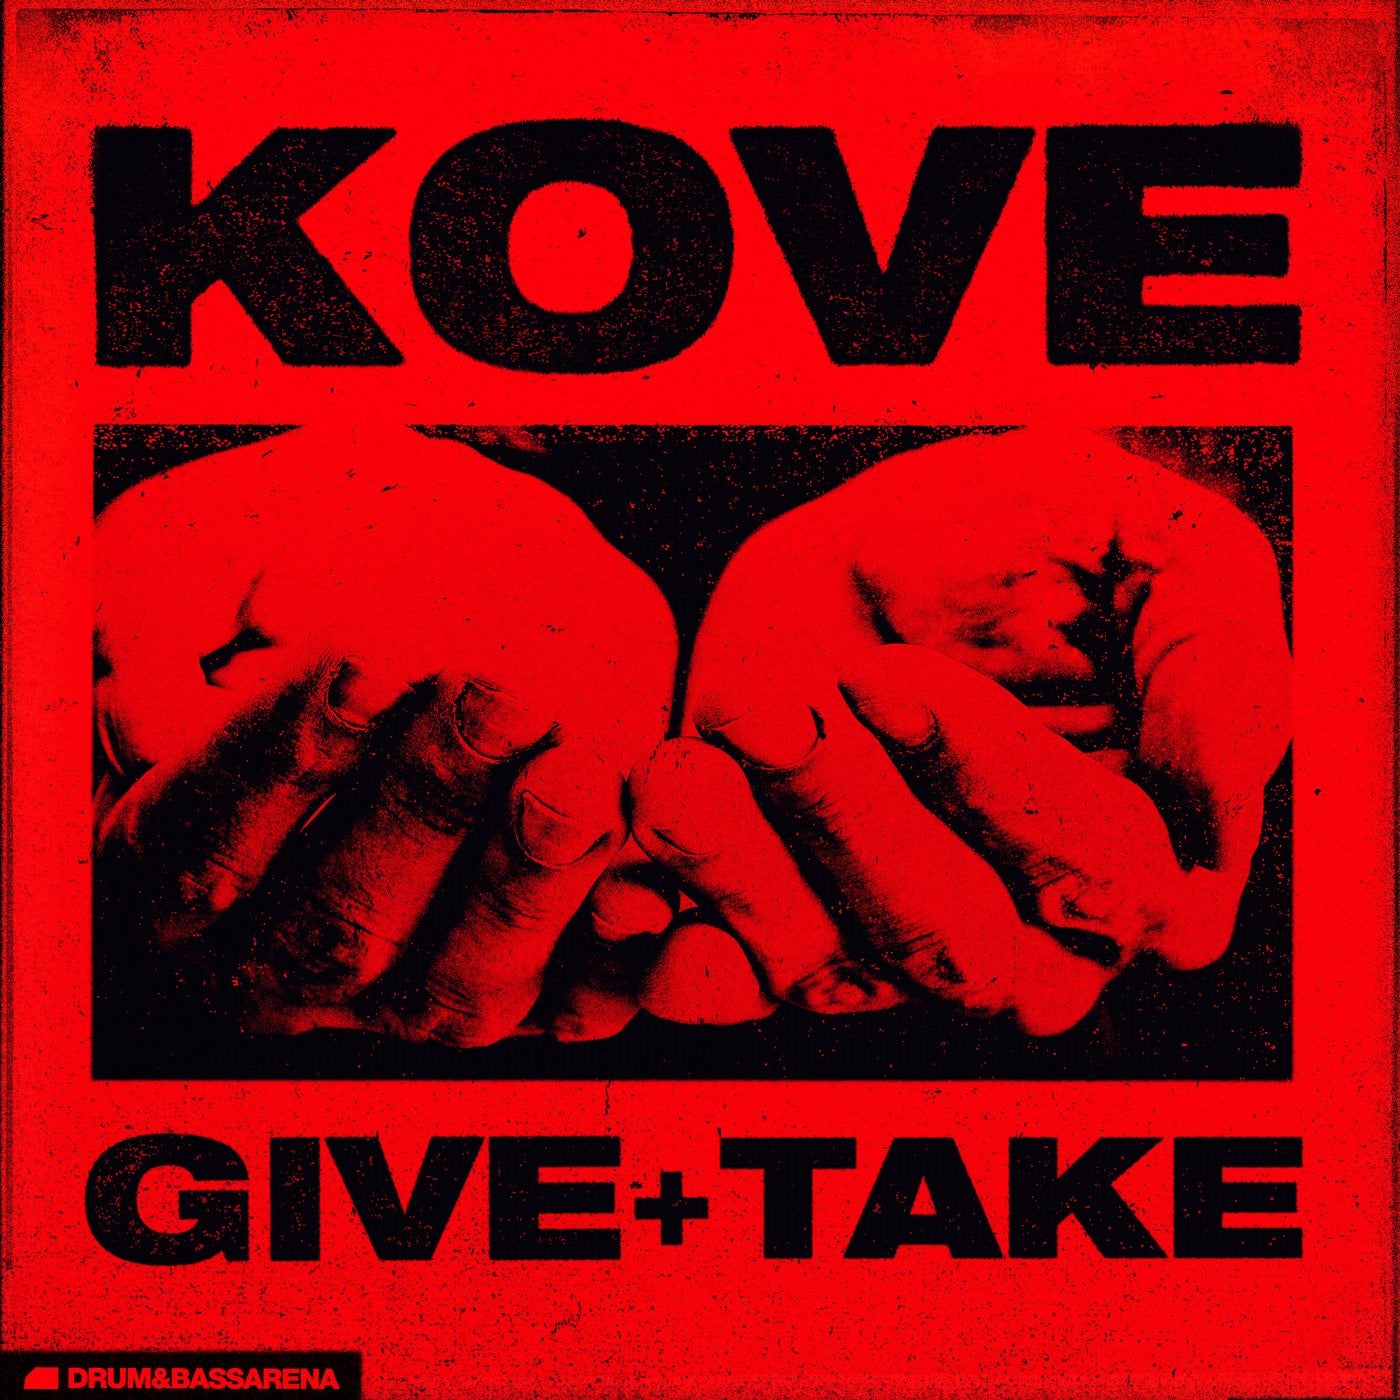 Give & Take